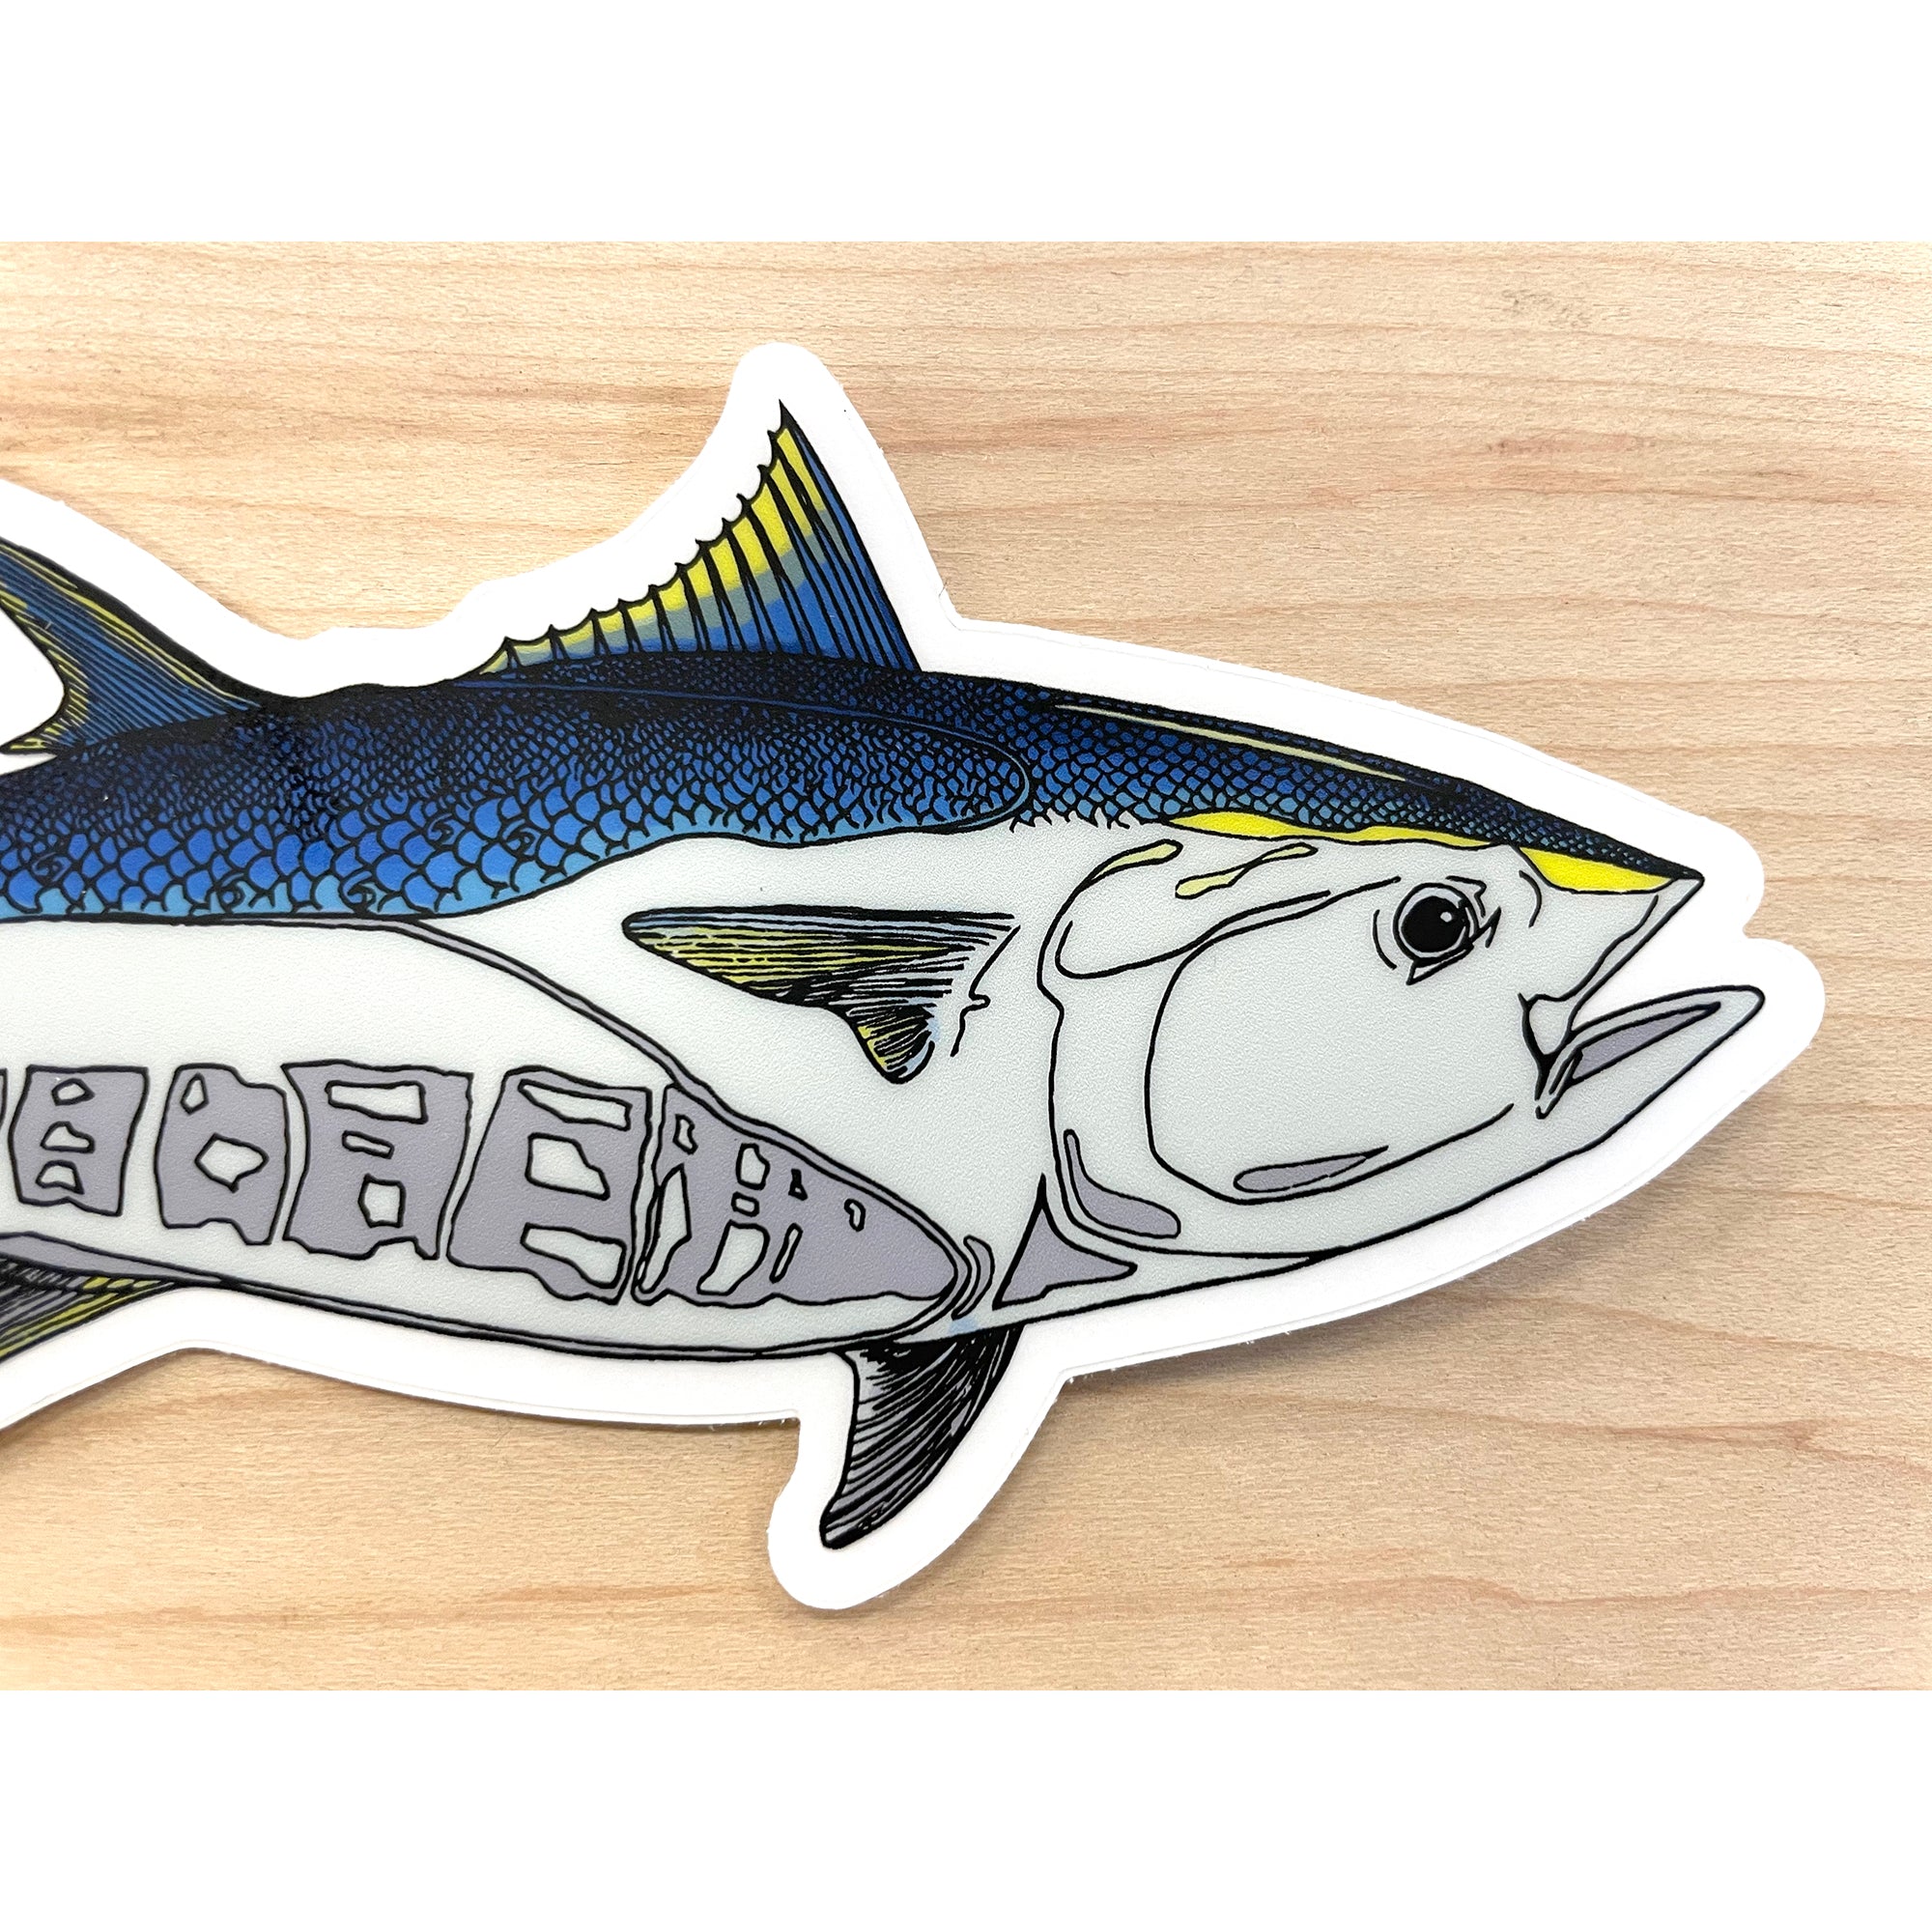 Bluefin Tuna Skin Kayak Vinyl Wrap Kit Graphic Decal/Sticker 12ft